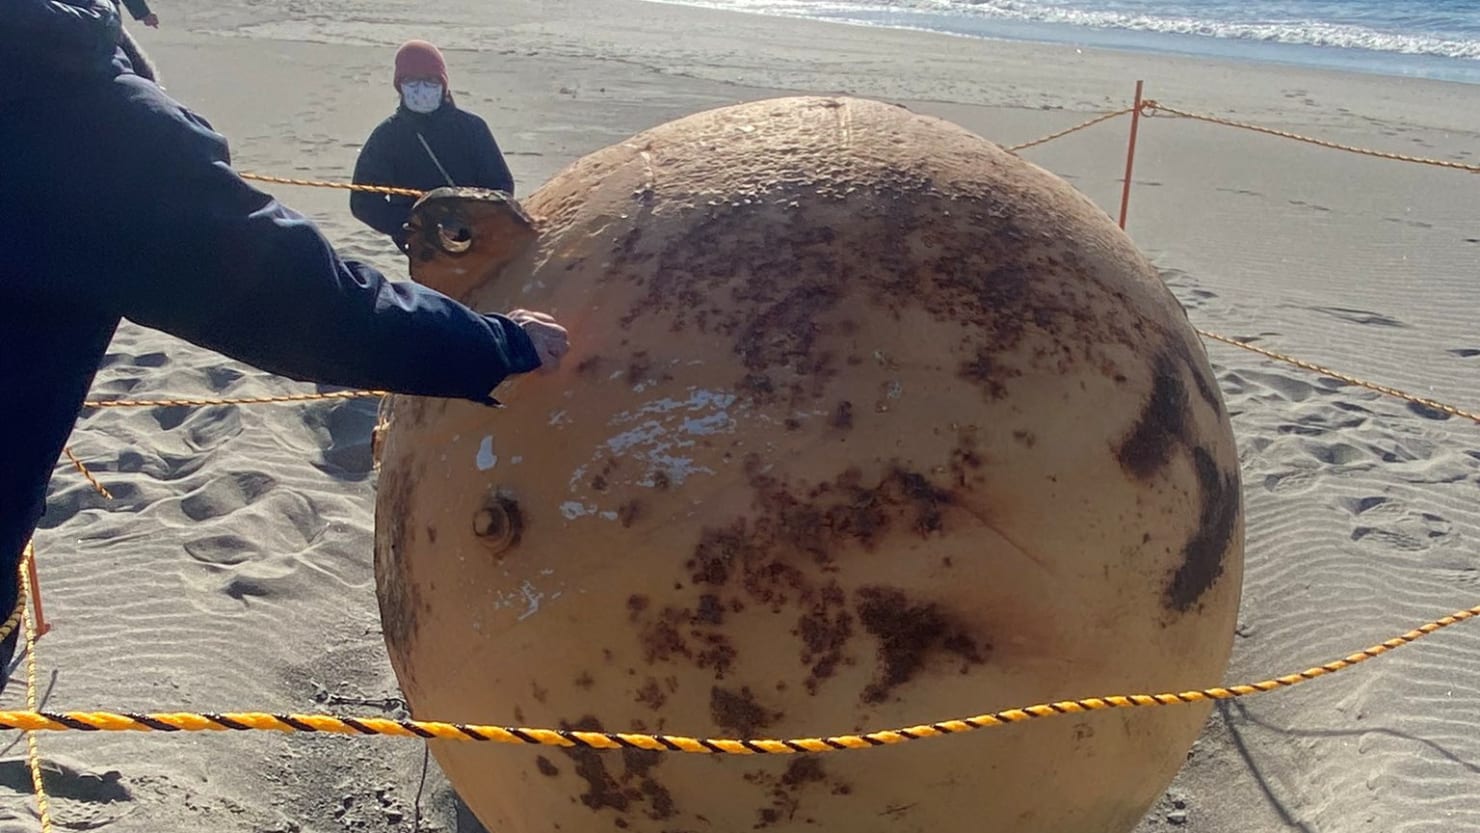 Beautiful Beach Spy - Weird Metal Sphere Washes Up on Beach, Sparking Wild Theories